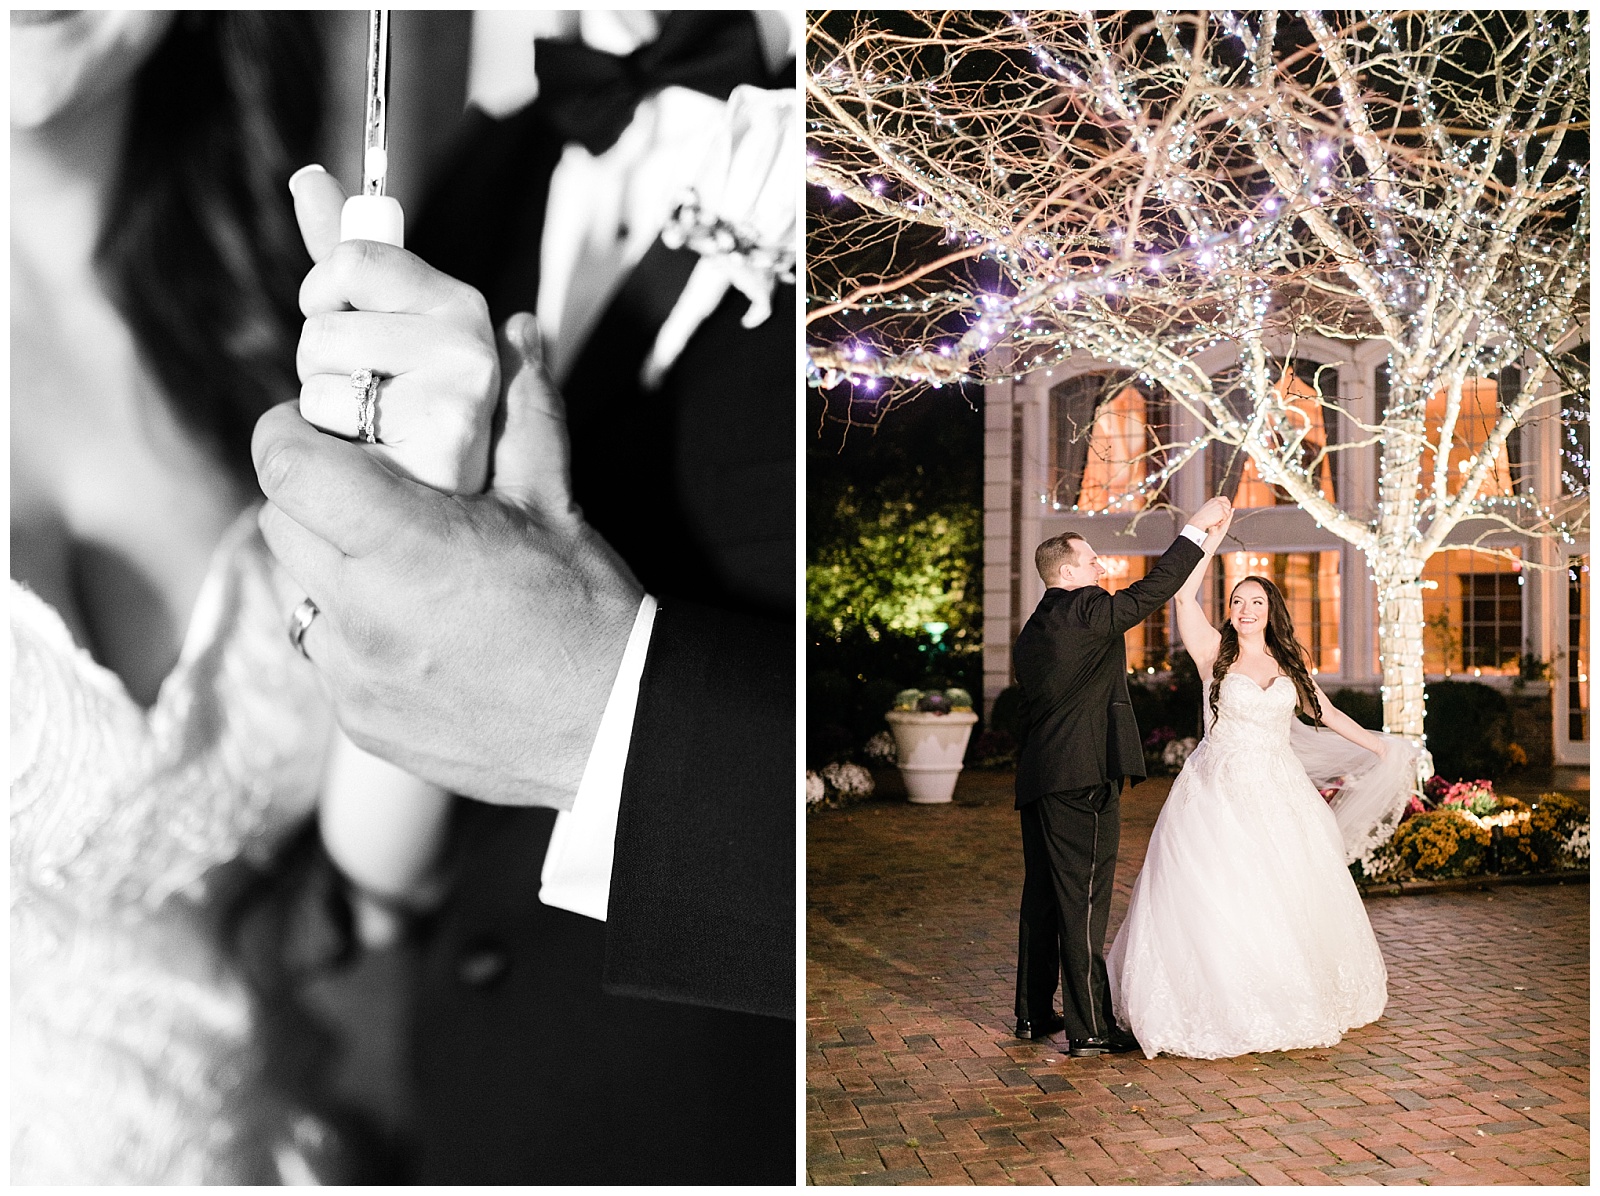 Beauty and the Beast Wedding,Bride,Bride & Groom Portraits,Disney Wedding,Estate at Florentine Gardens,Groom,NJ Wedding,Night Portrait,Photographer,Wedding Photographer,